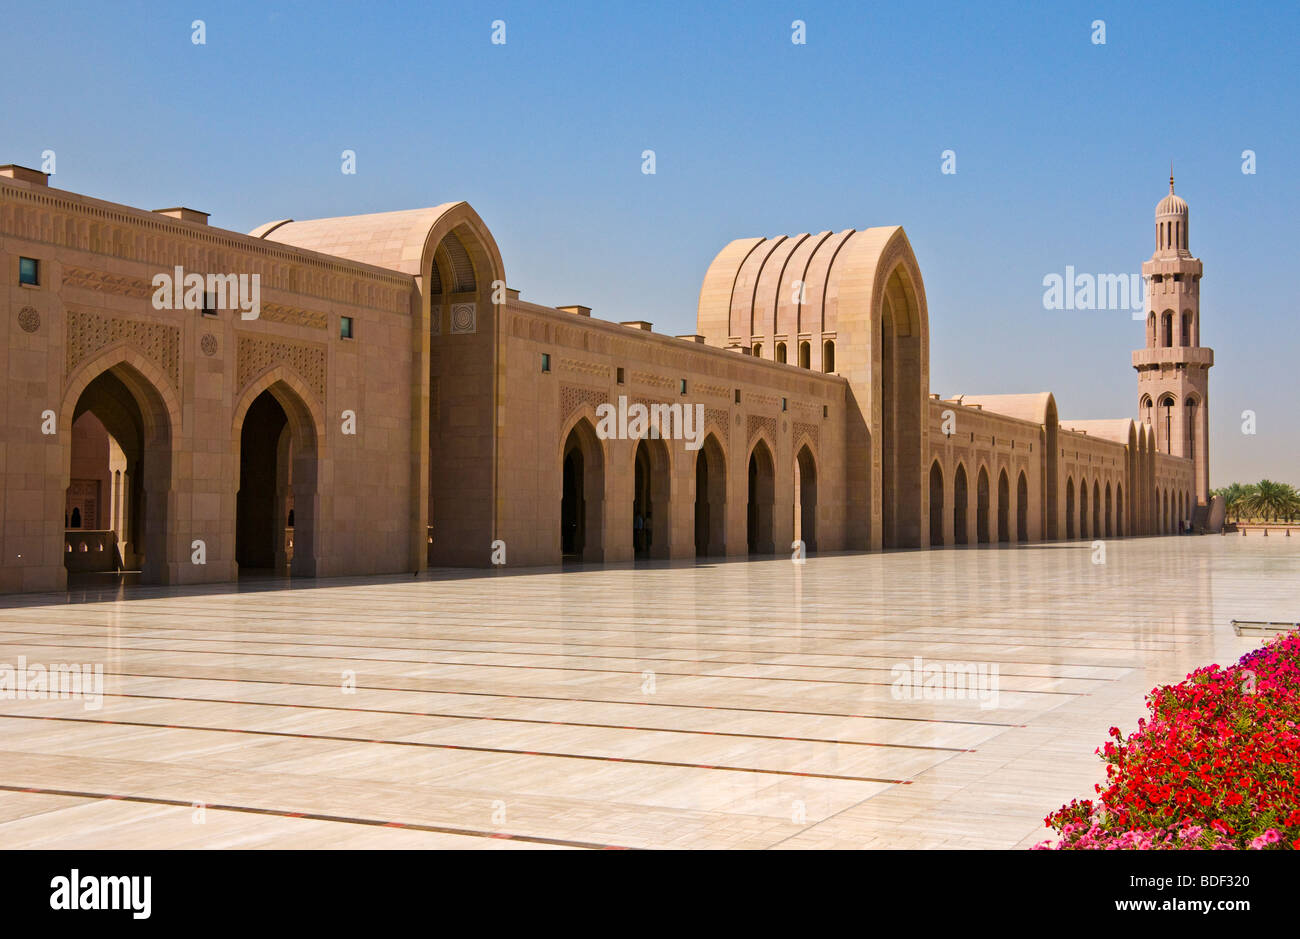 Gran Mezquita Sultan Qaboos Mascate, Sultanato de Omán Foto de stock